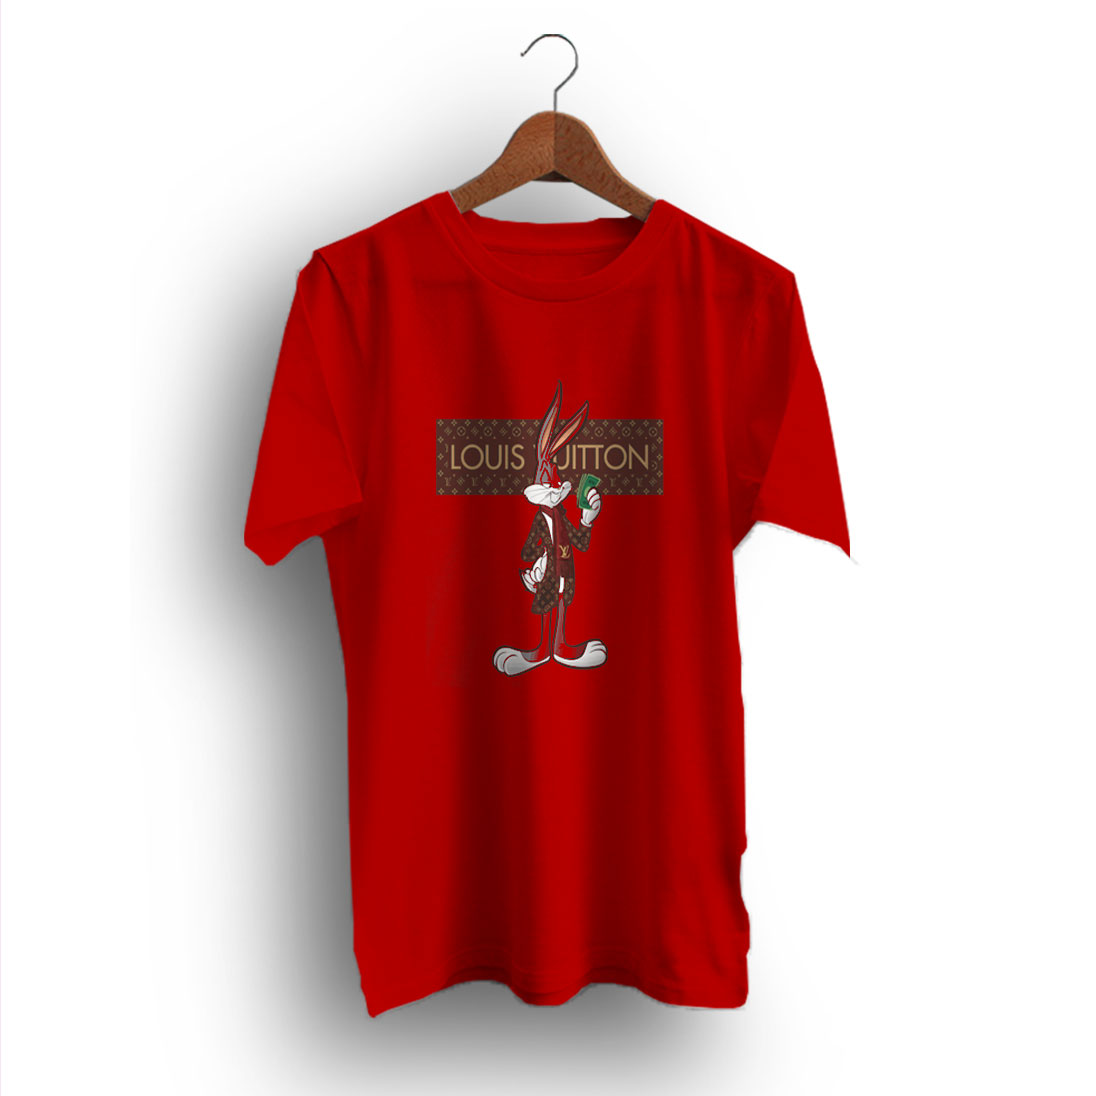 Cheap Red Louis Vuitton Logo T Shirt - Shirt Low Price